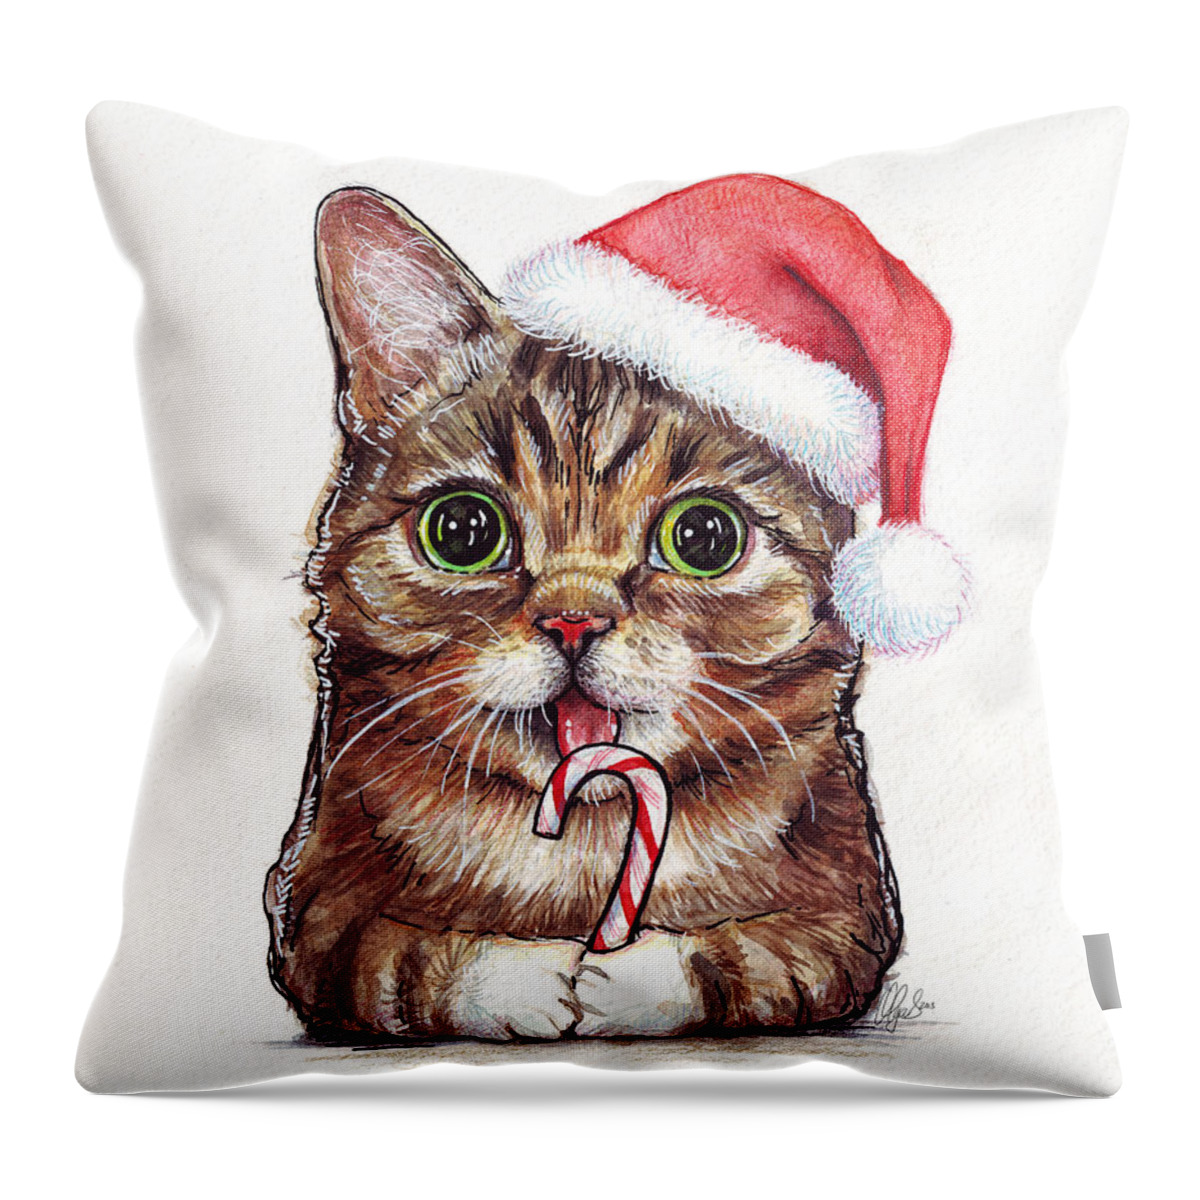 Lil Bub Throw Pillow featuring the painting Cat Santa Christmas Animal by Olga Shvartsur